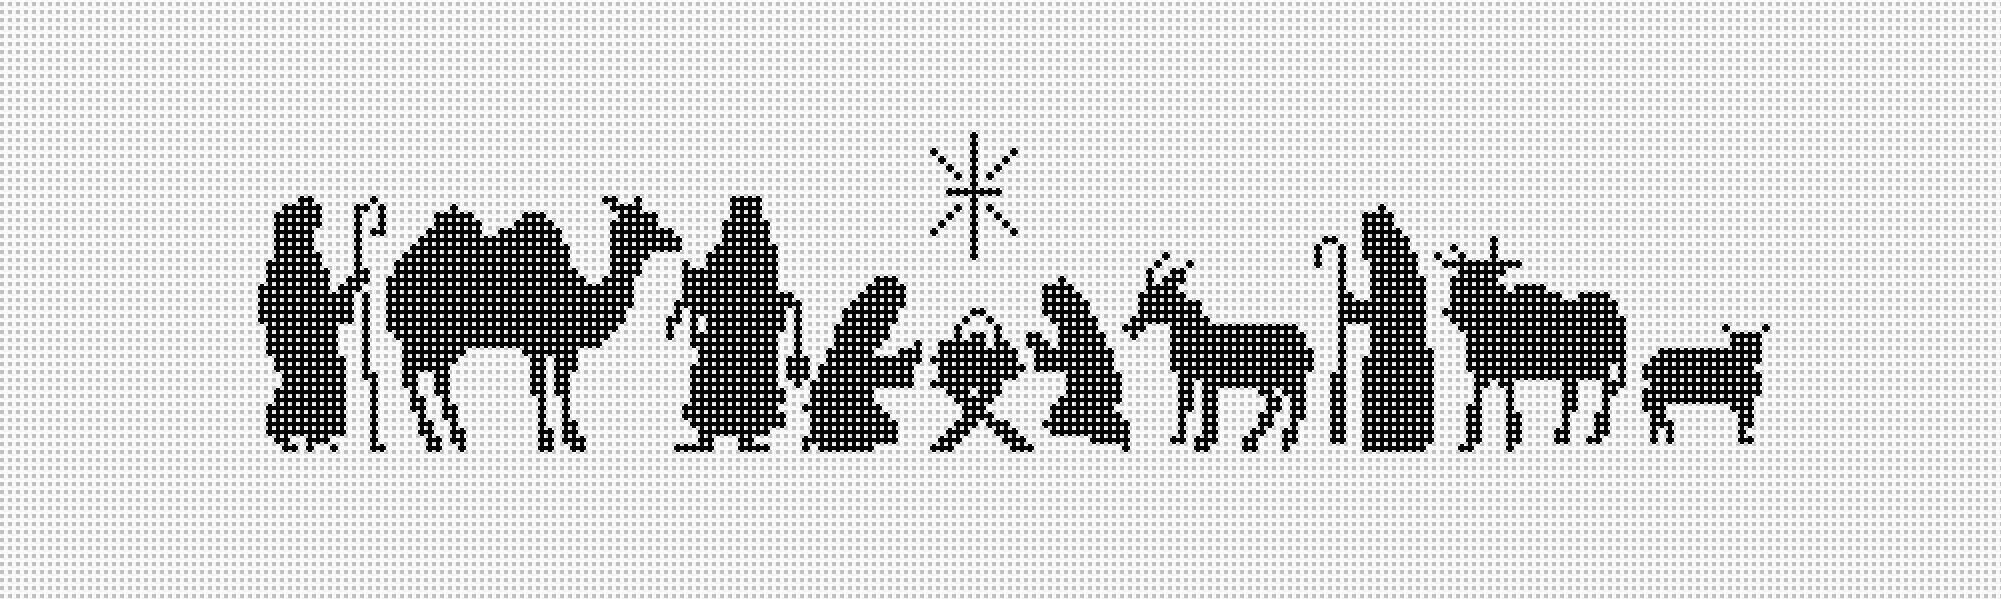 Nativity scene silhouette - Needlepoint by Laura